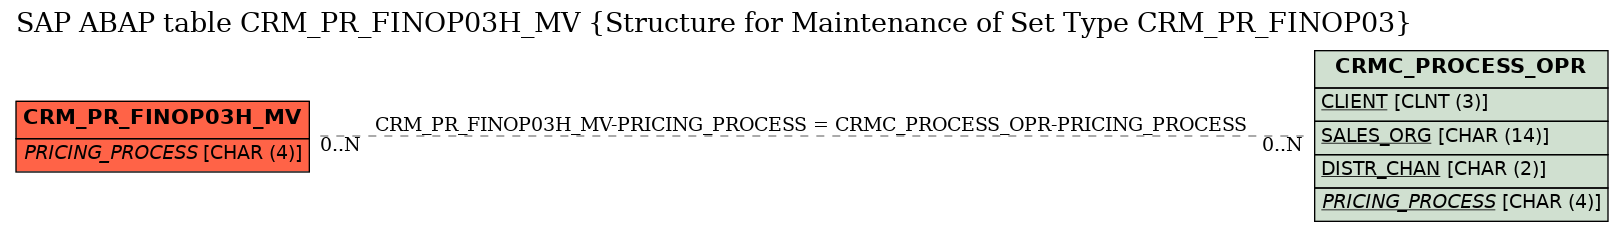 E-R Diagram for table CRM_PR_FINOP03H_MV (Structure for Maintenance of Set Type CRM_PR_FINOP03)